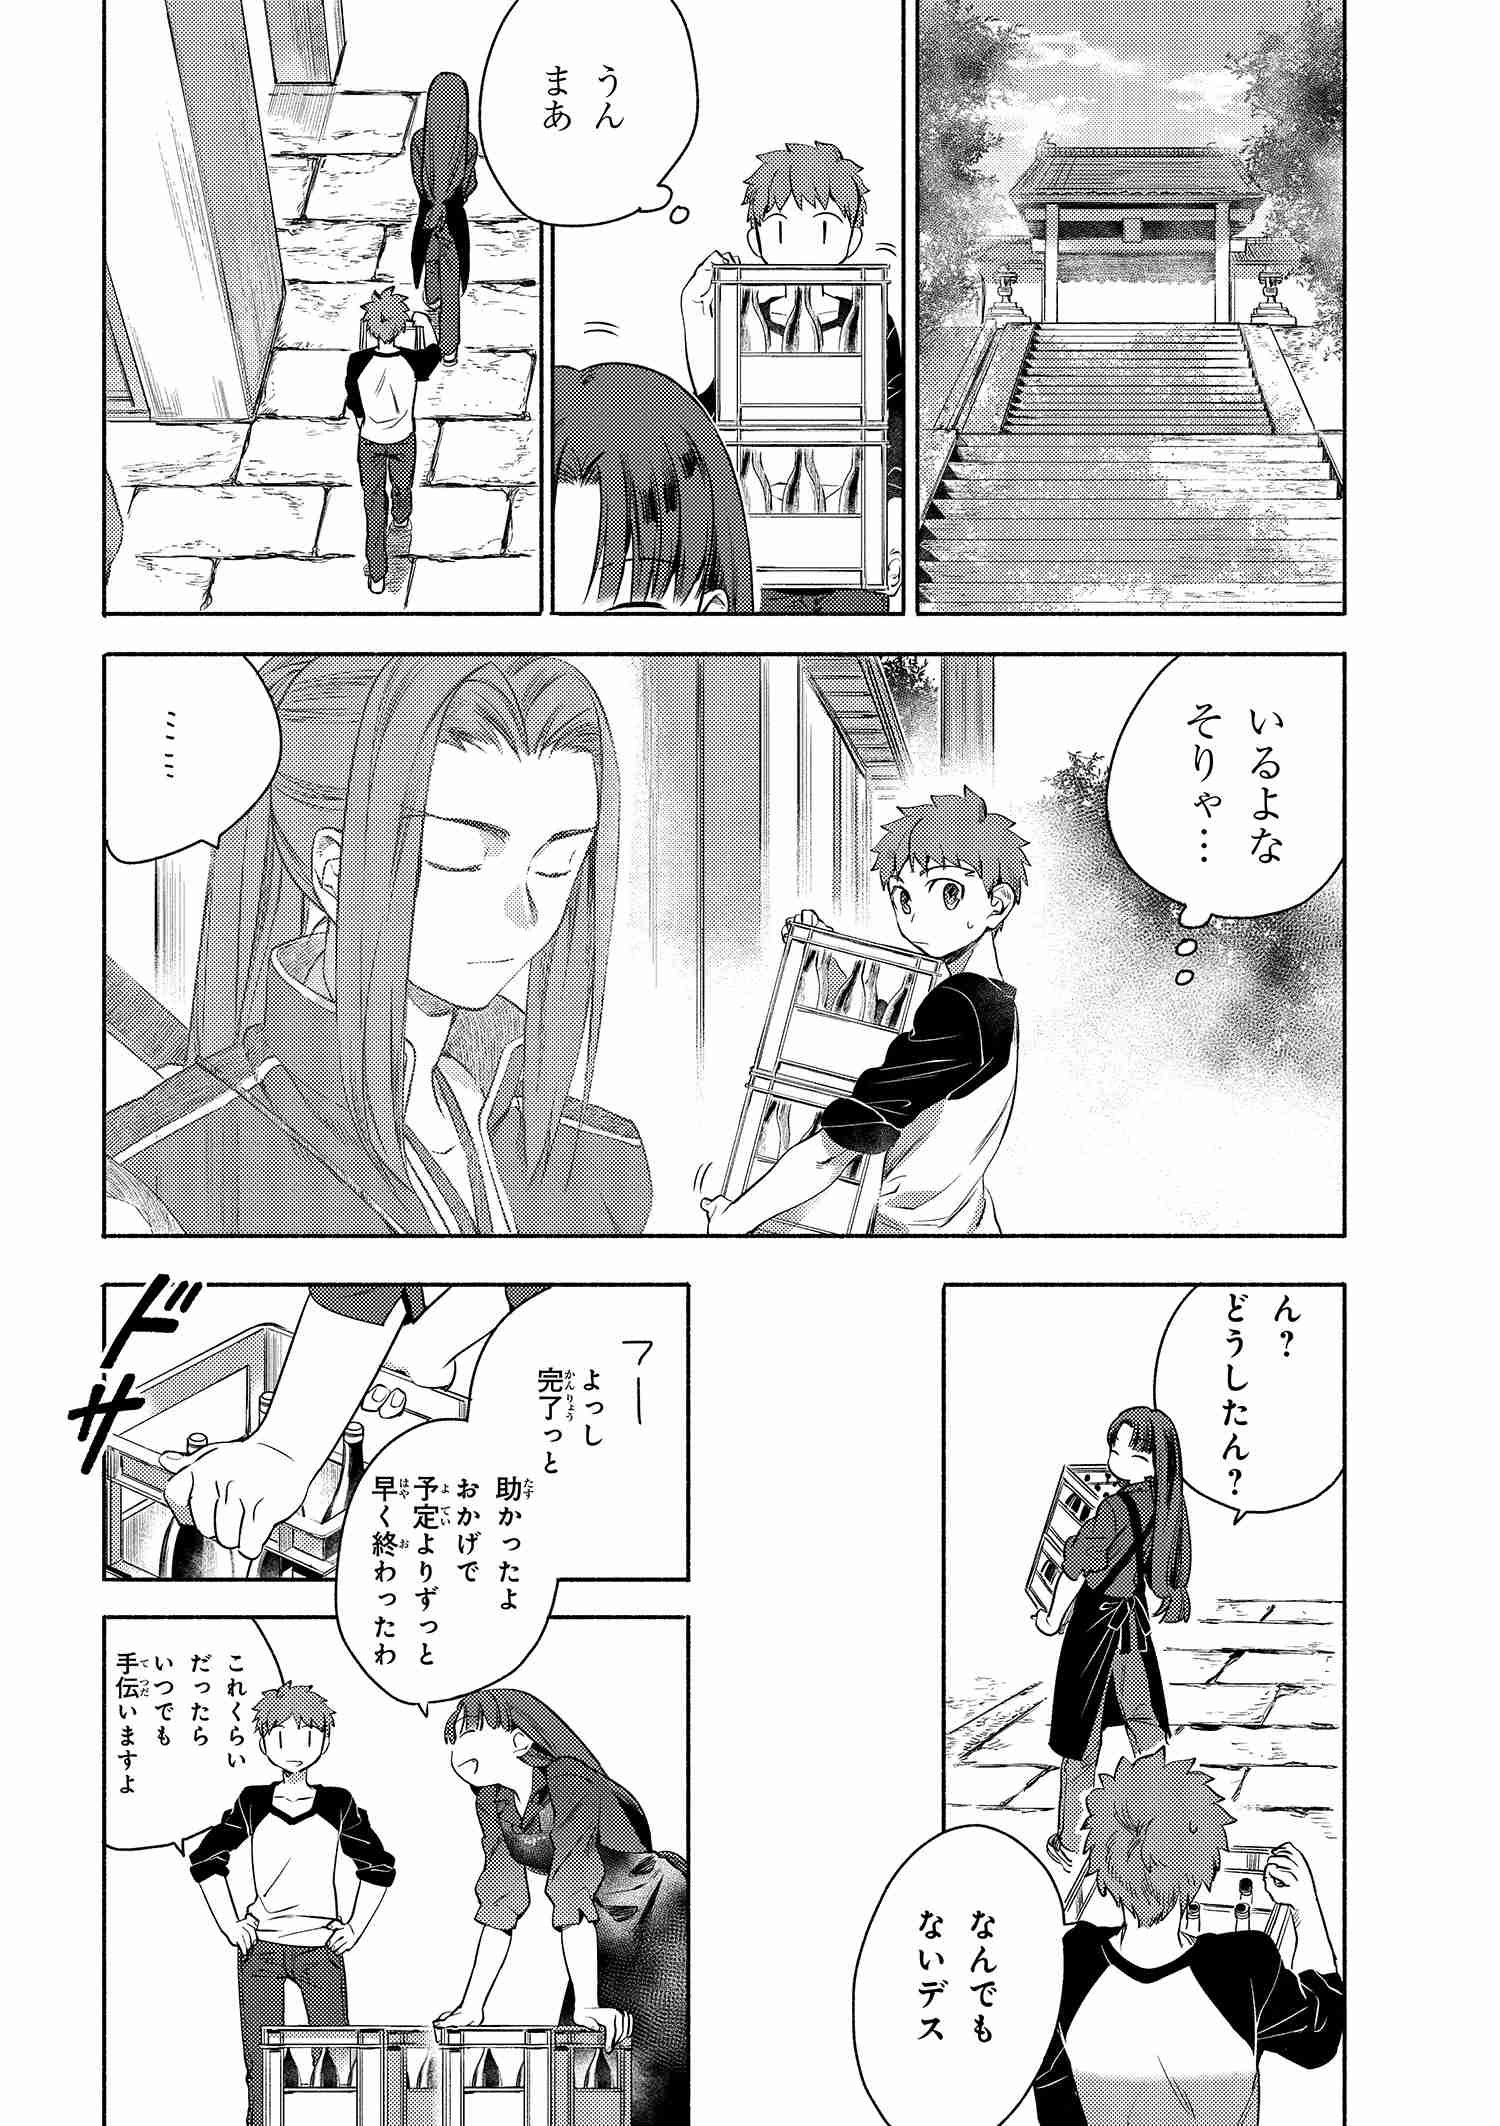 Emiya-san Chi no Kyou no Gohan - Chapter 4 - Page 2